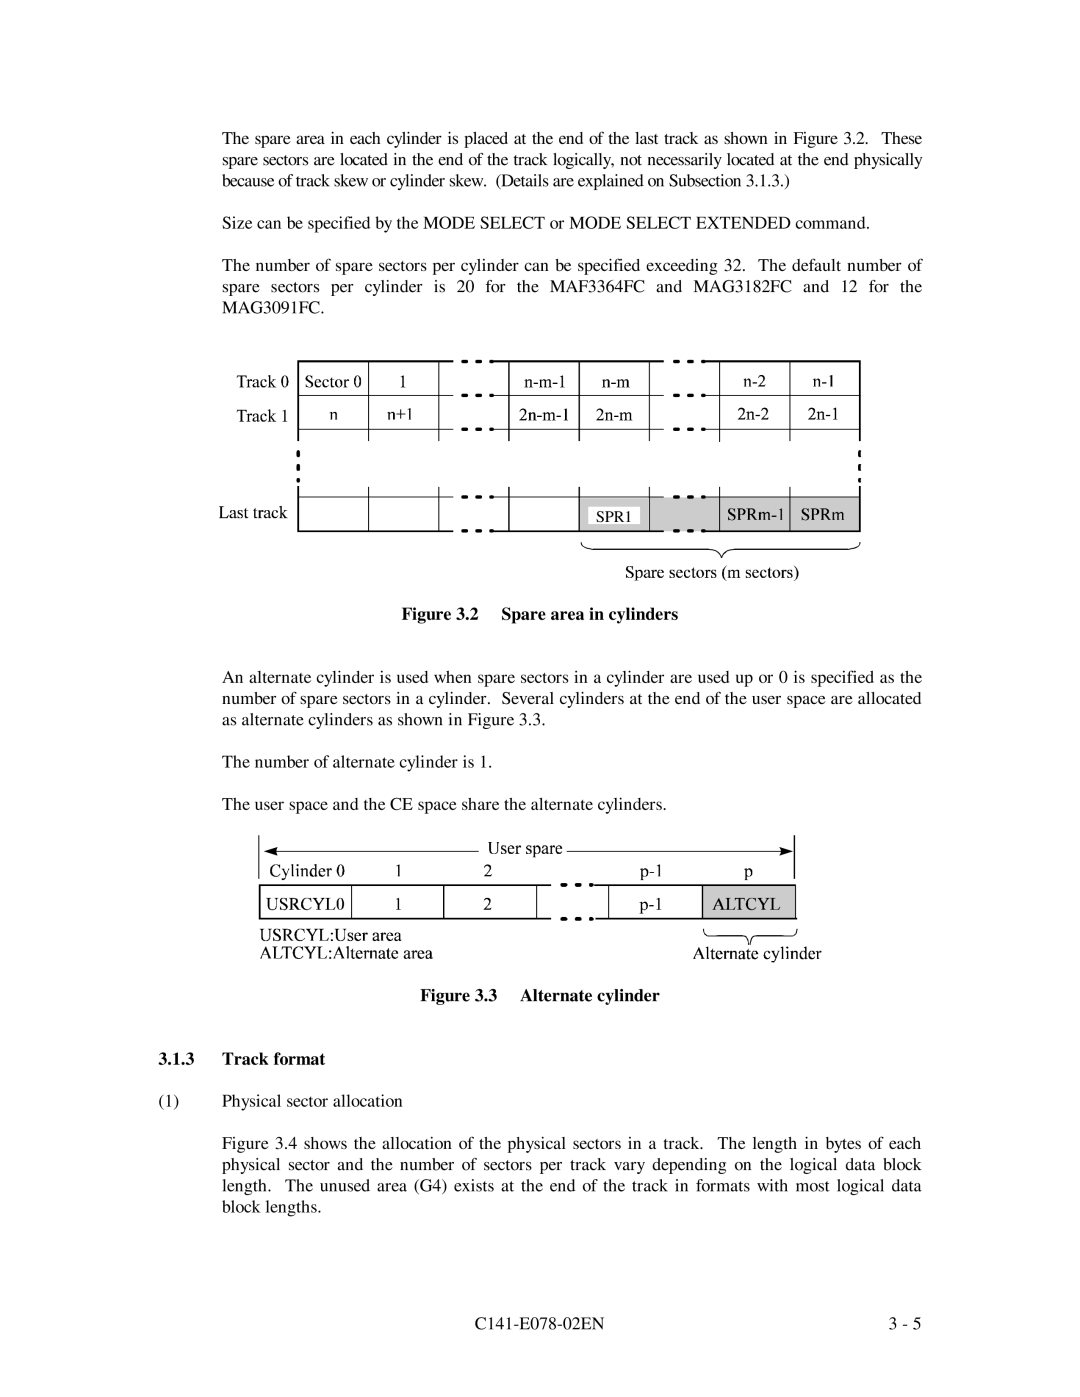 Fujitsu MAG3091FC, MAF3364FC, MAG3182FC manual 2 Spare area in cylinders, 3 Alternate cylinder 3.1.3 Track format, SPR1 